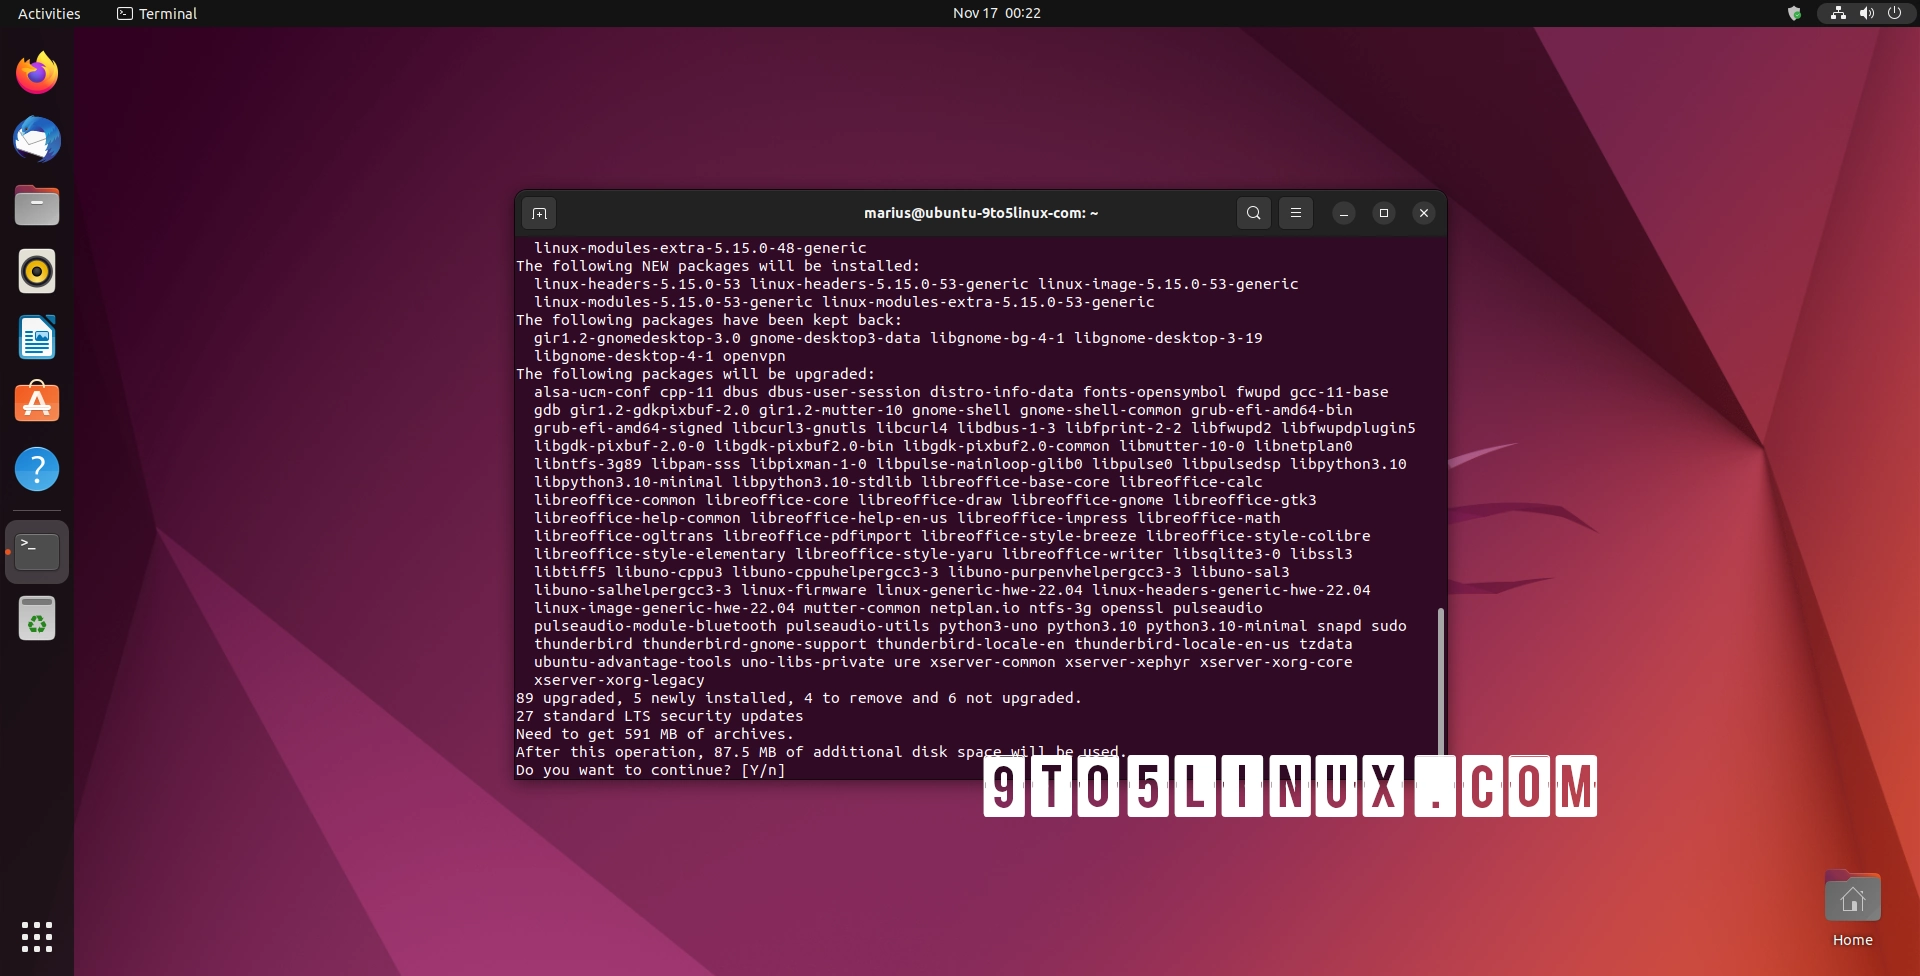 Canonical Releases New Ubuntu Linux Kernel Security Updates to Fix 16 Vulnerabilities